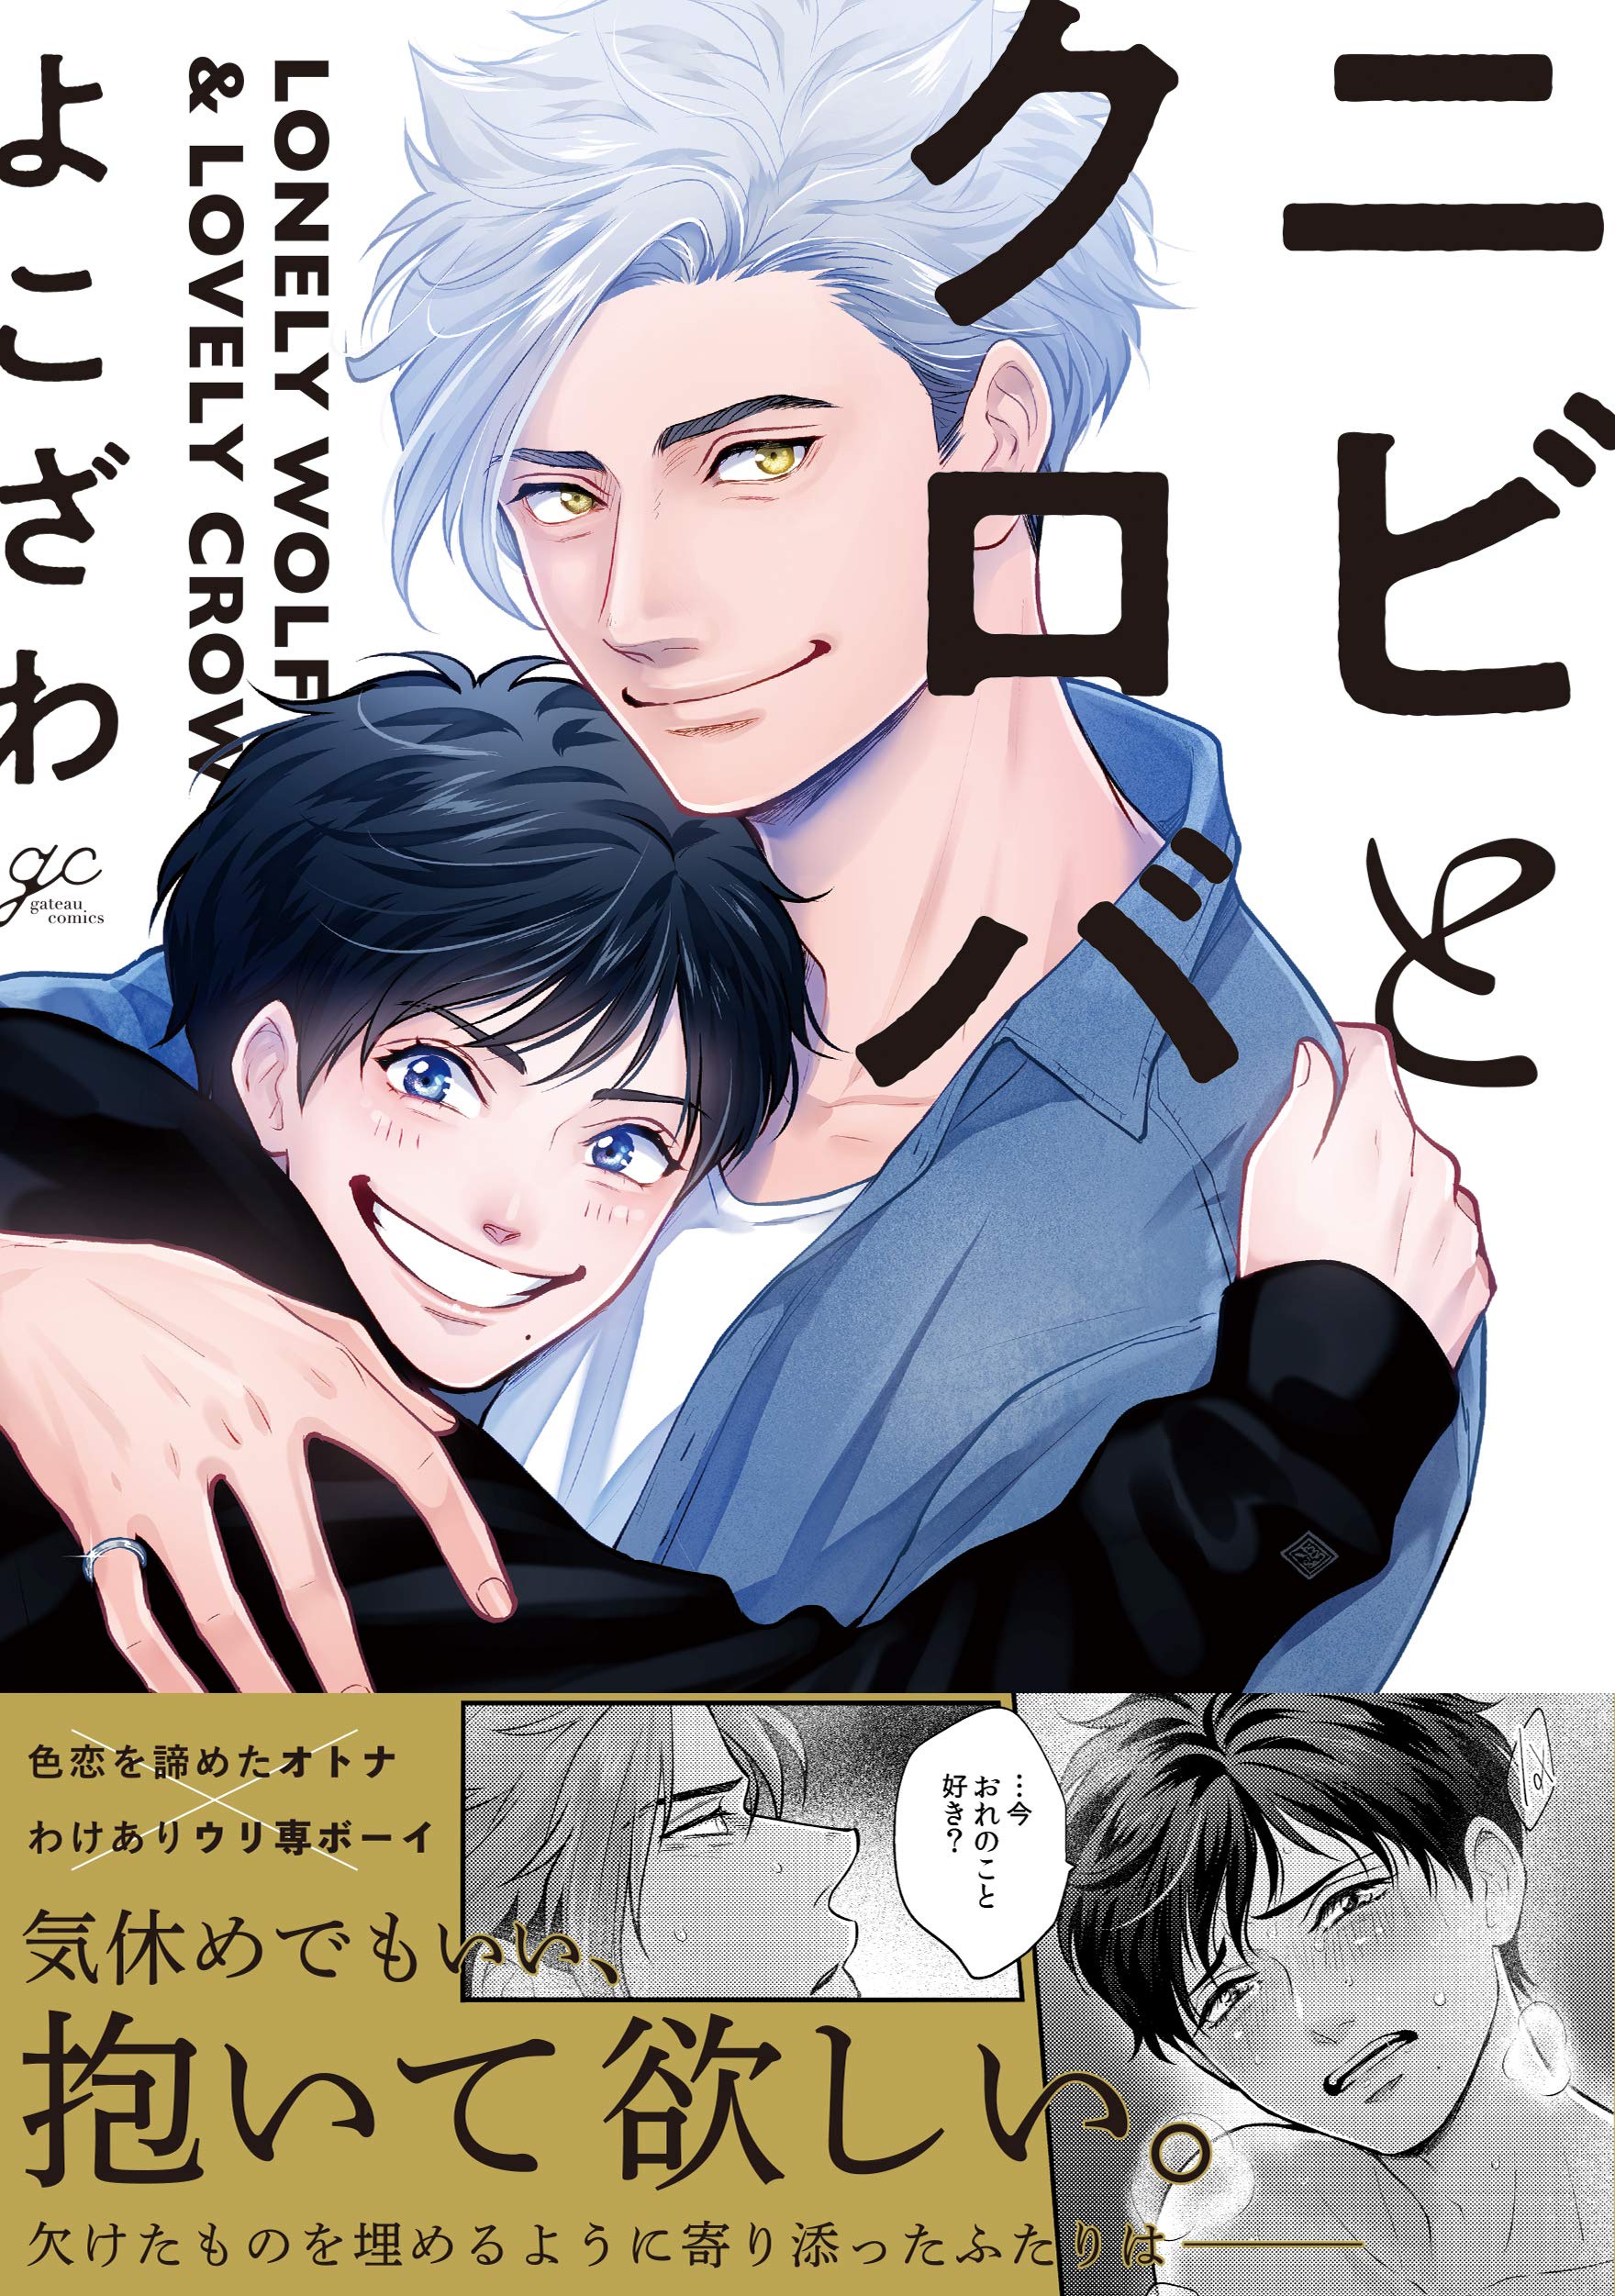 Boys Love (Yaoi) Comics - Nibi to Kuroba (ニビとクロバ (gateauコミックス)) / Yokozawa